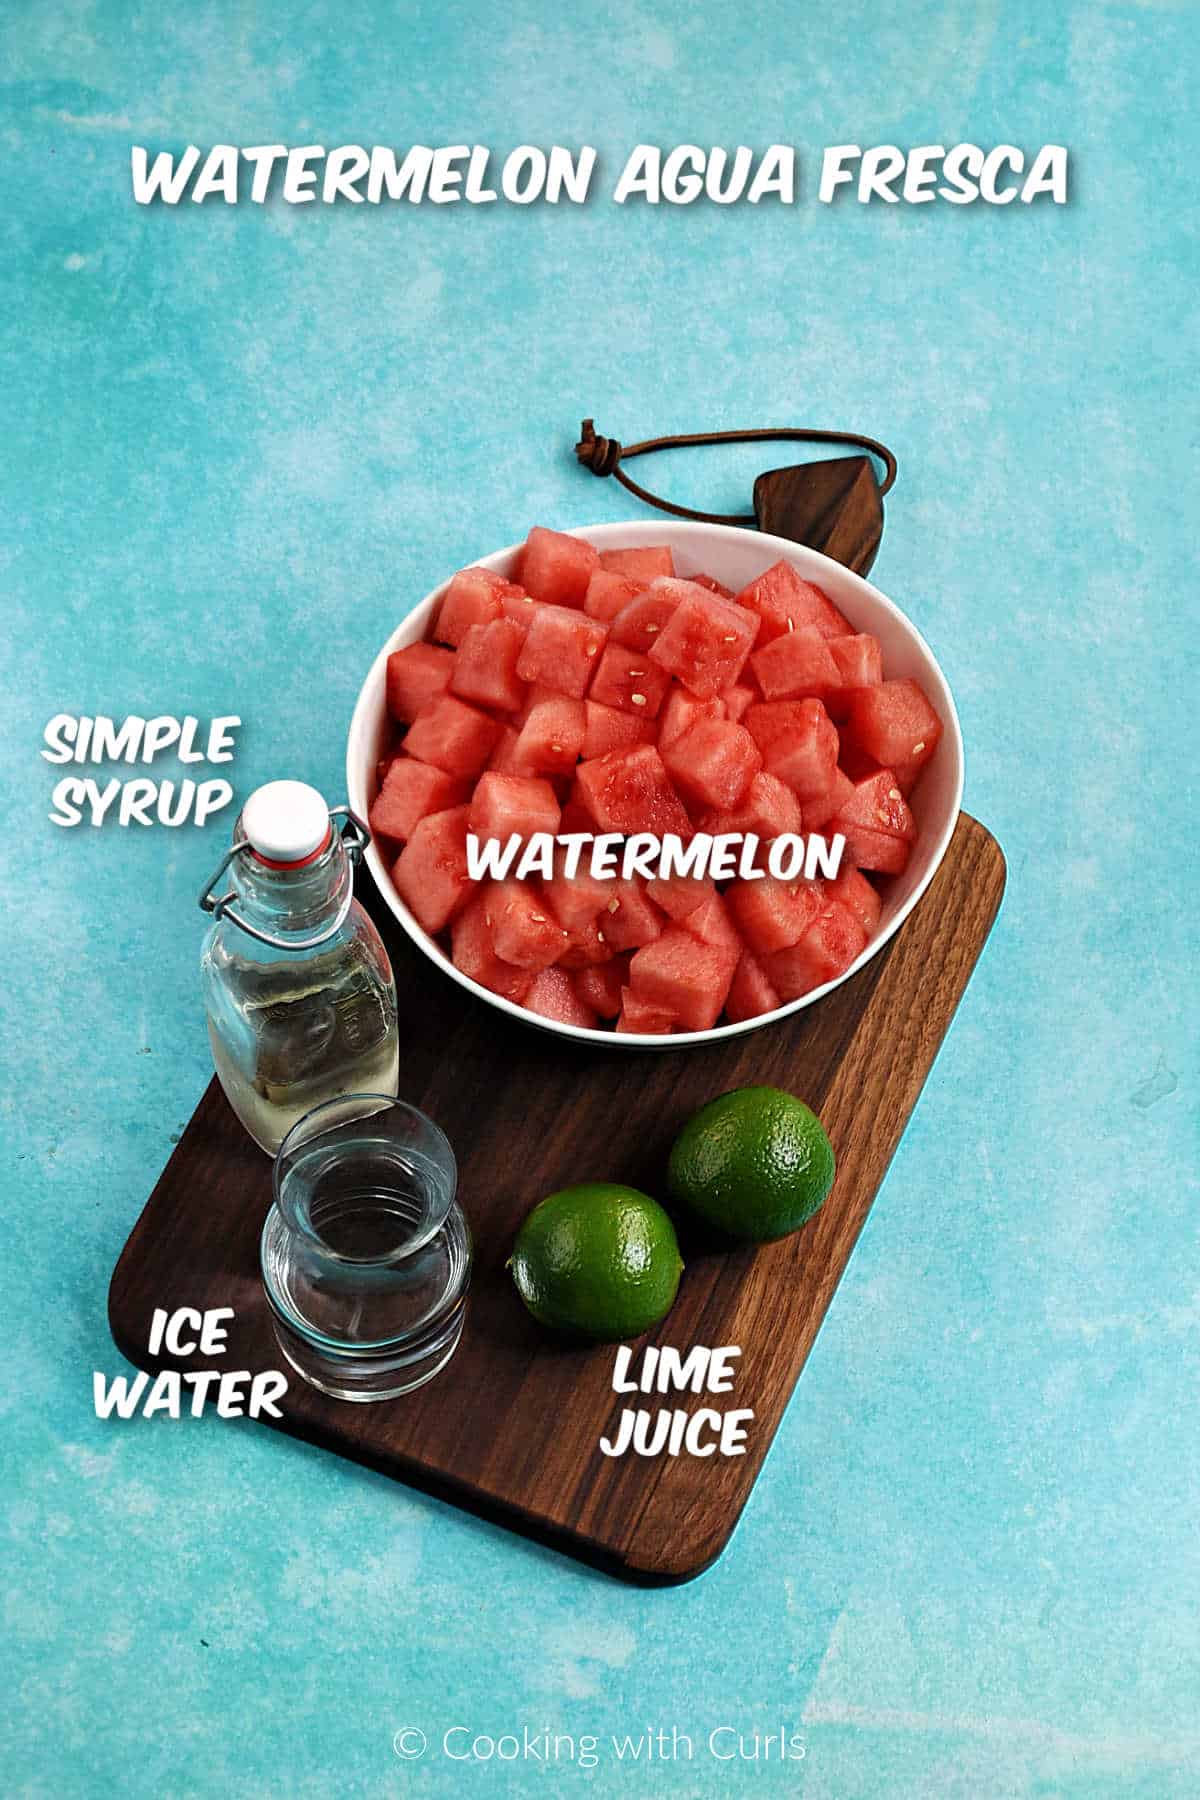 Ingredients needed to make watermelon agua fresca.